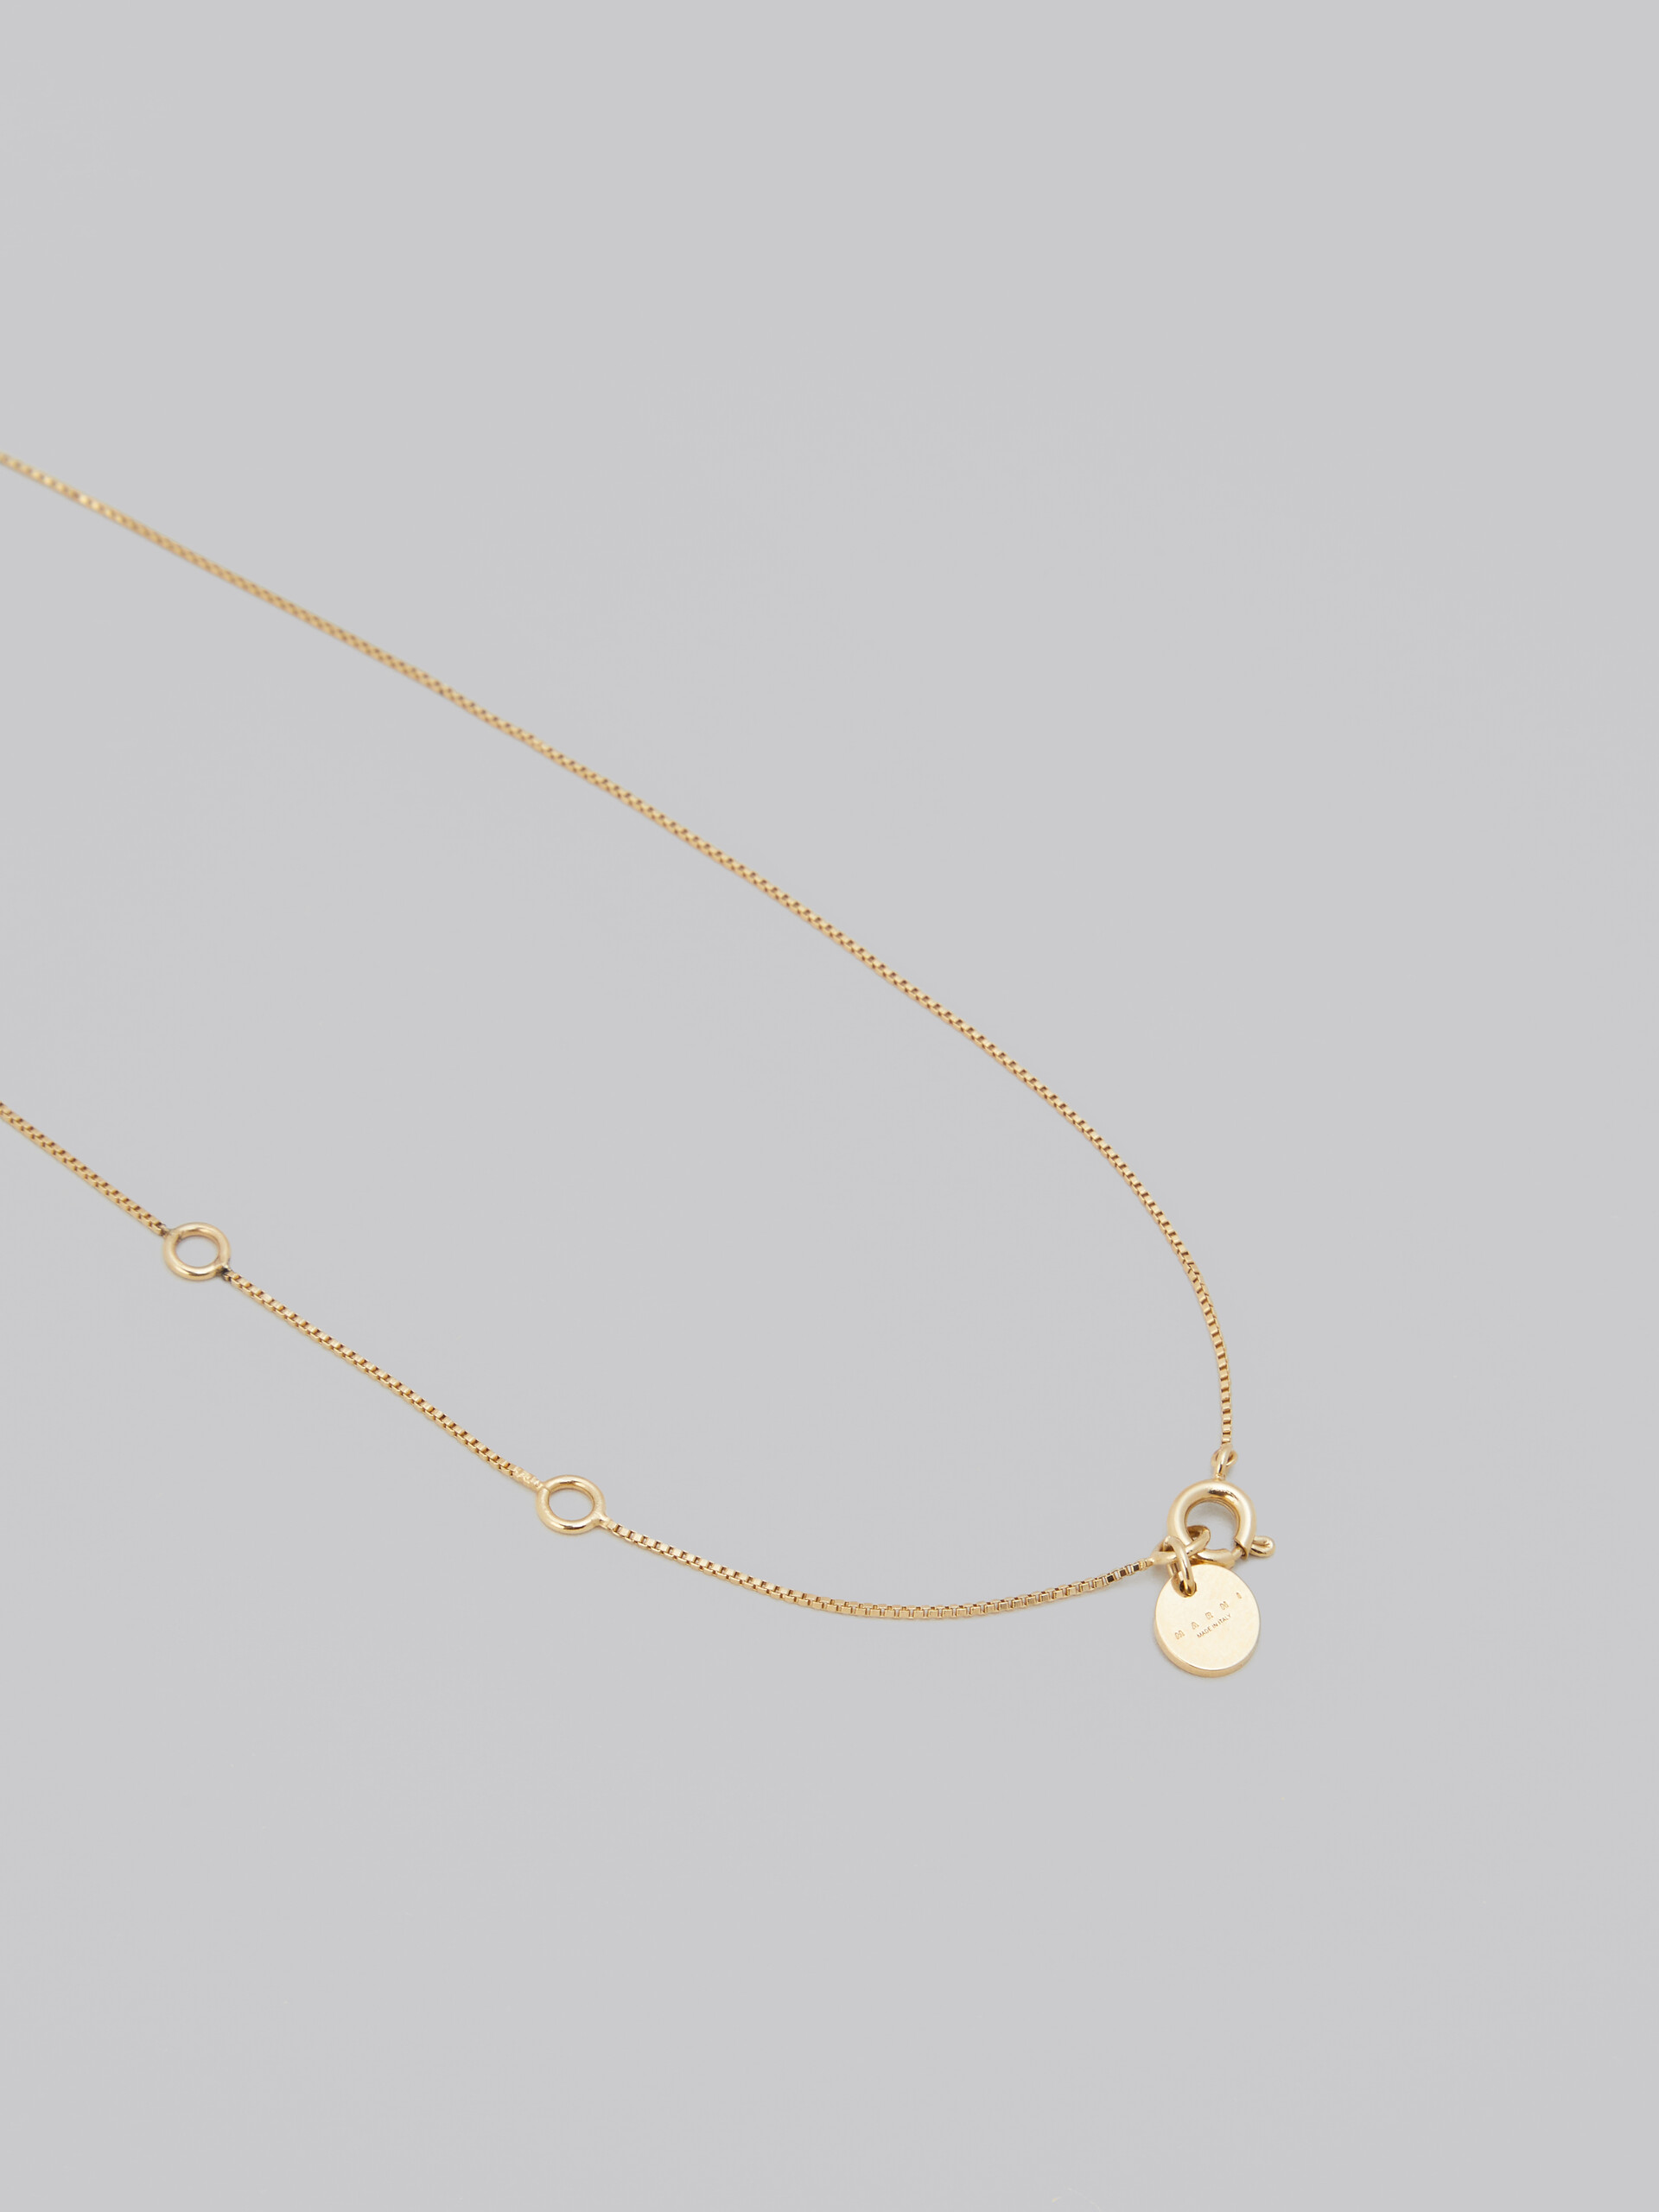 White quartz multi-stone necklace with rhinestone polka dots - Necklaces - Image 4